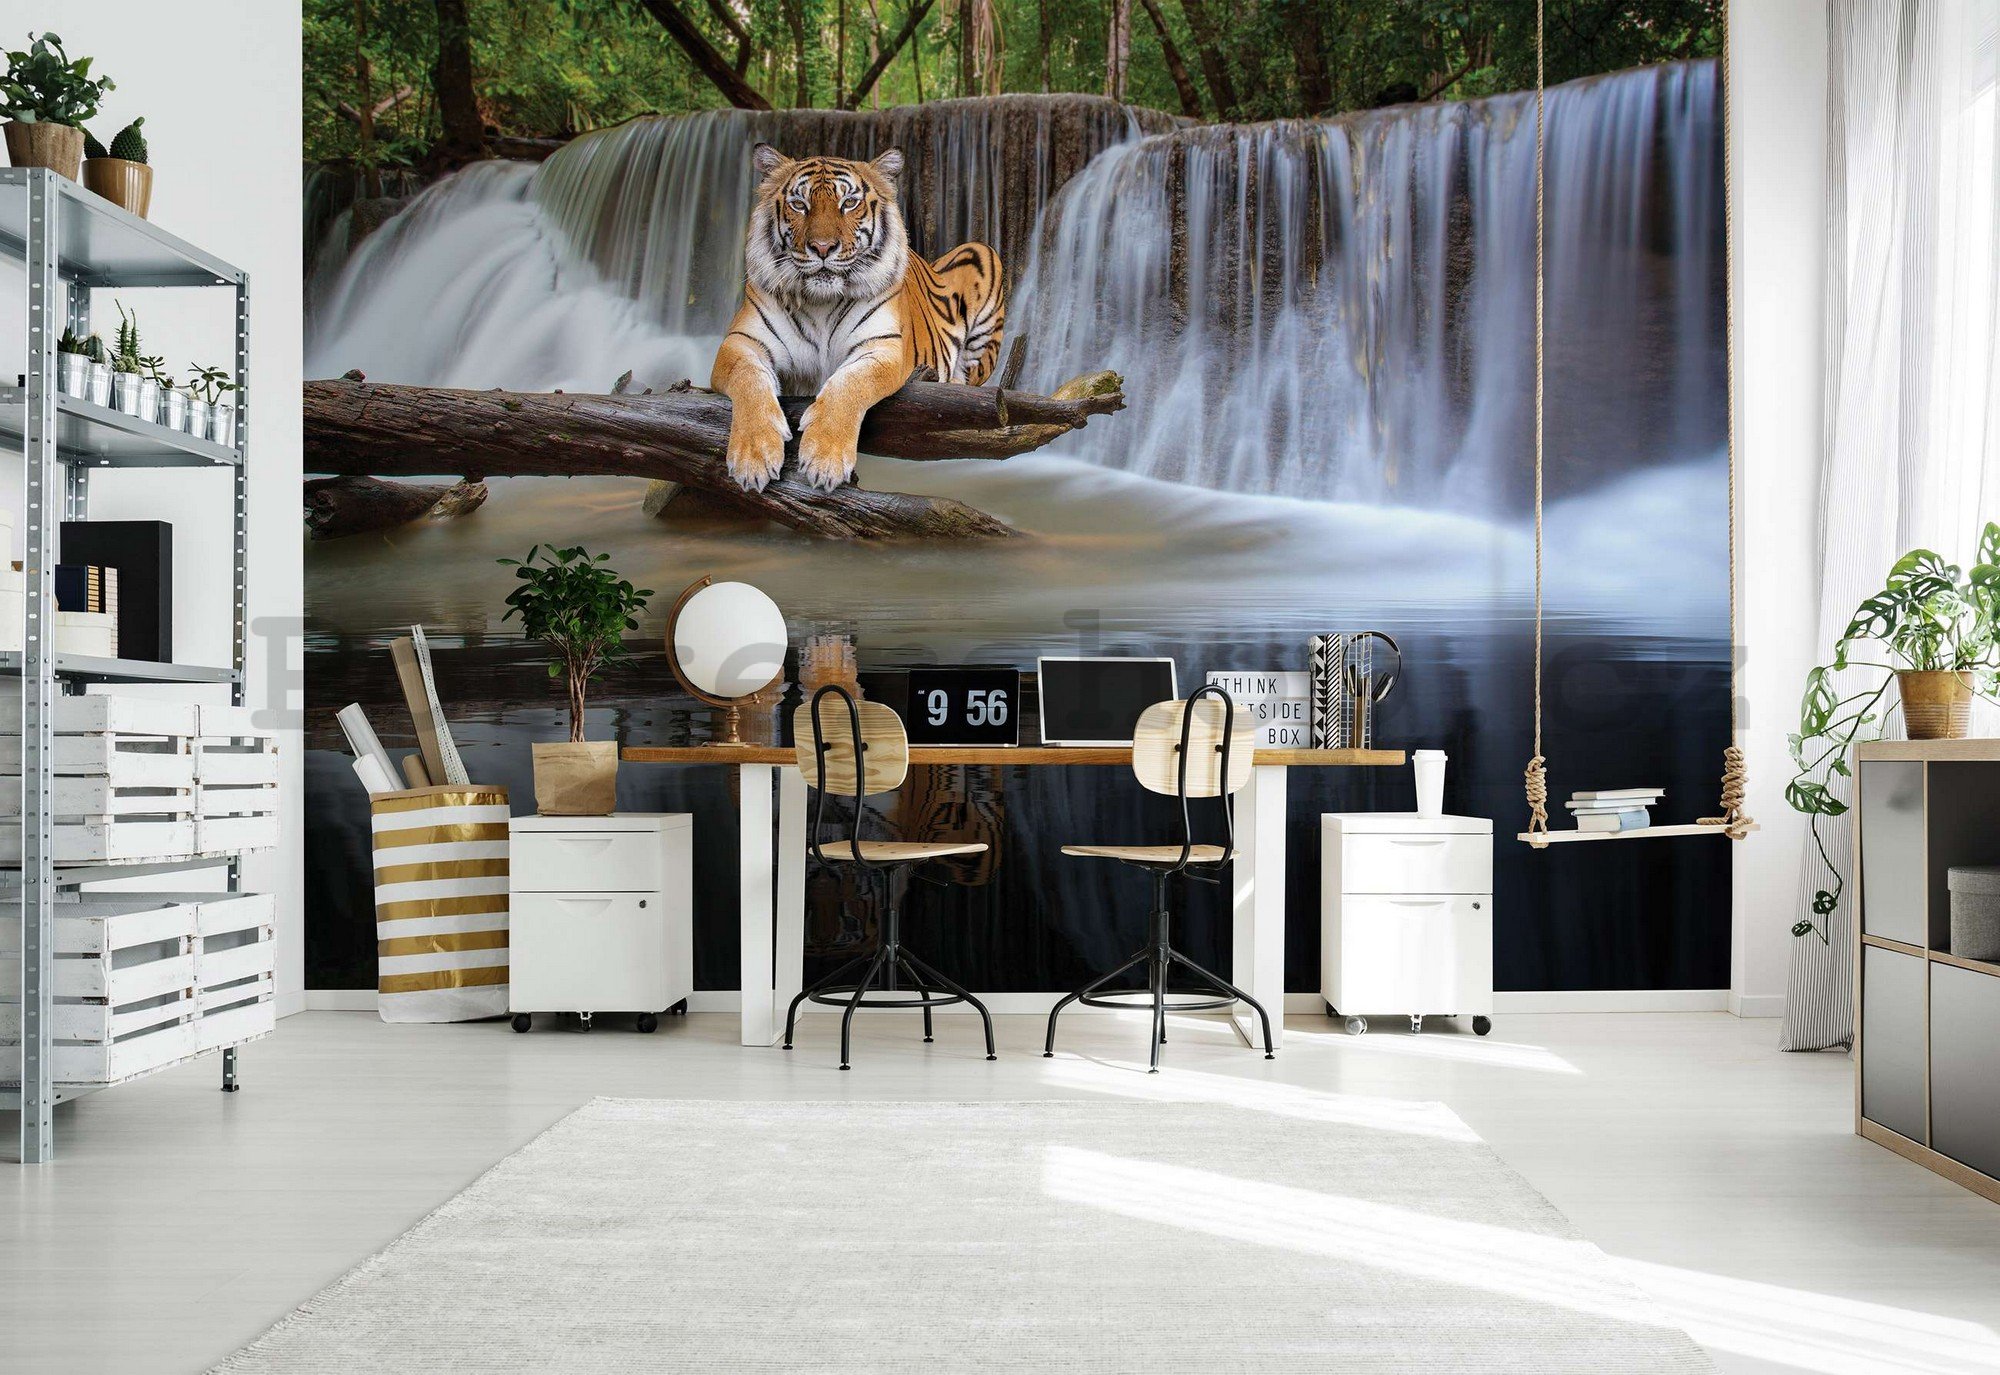 Fototapeta vliesová: Tygr u vodopádu - 254x184 cm